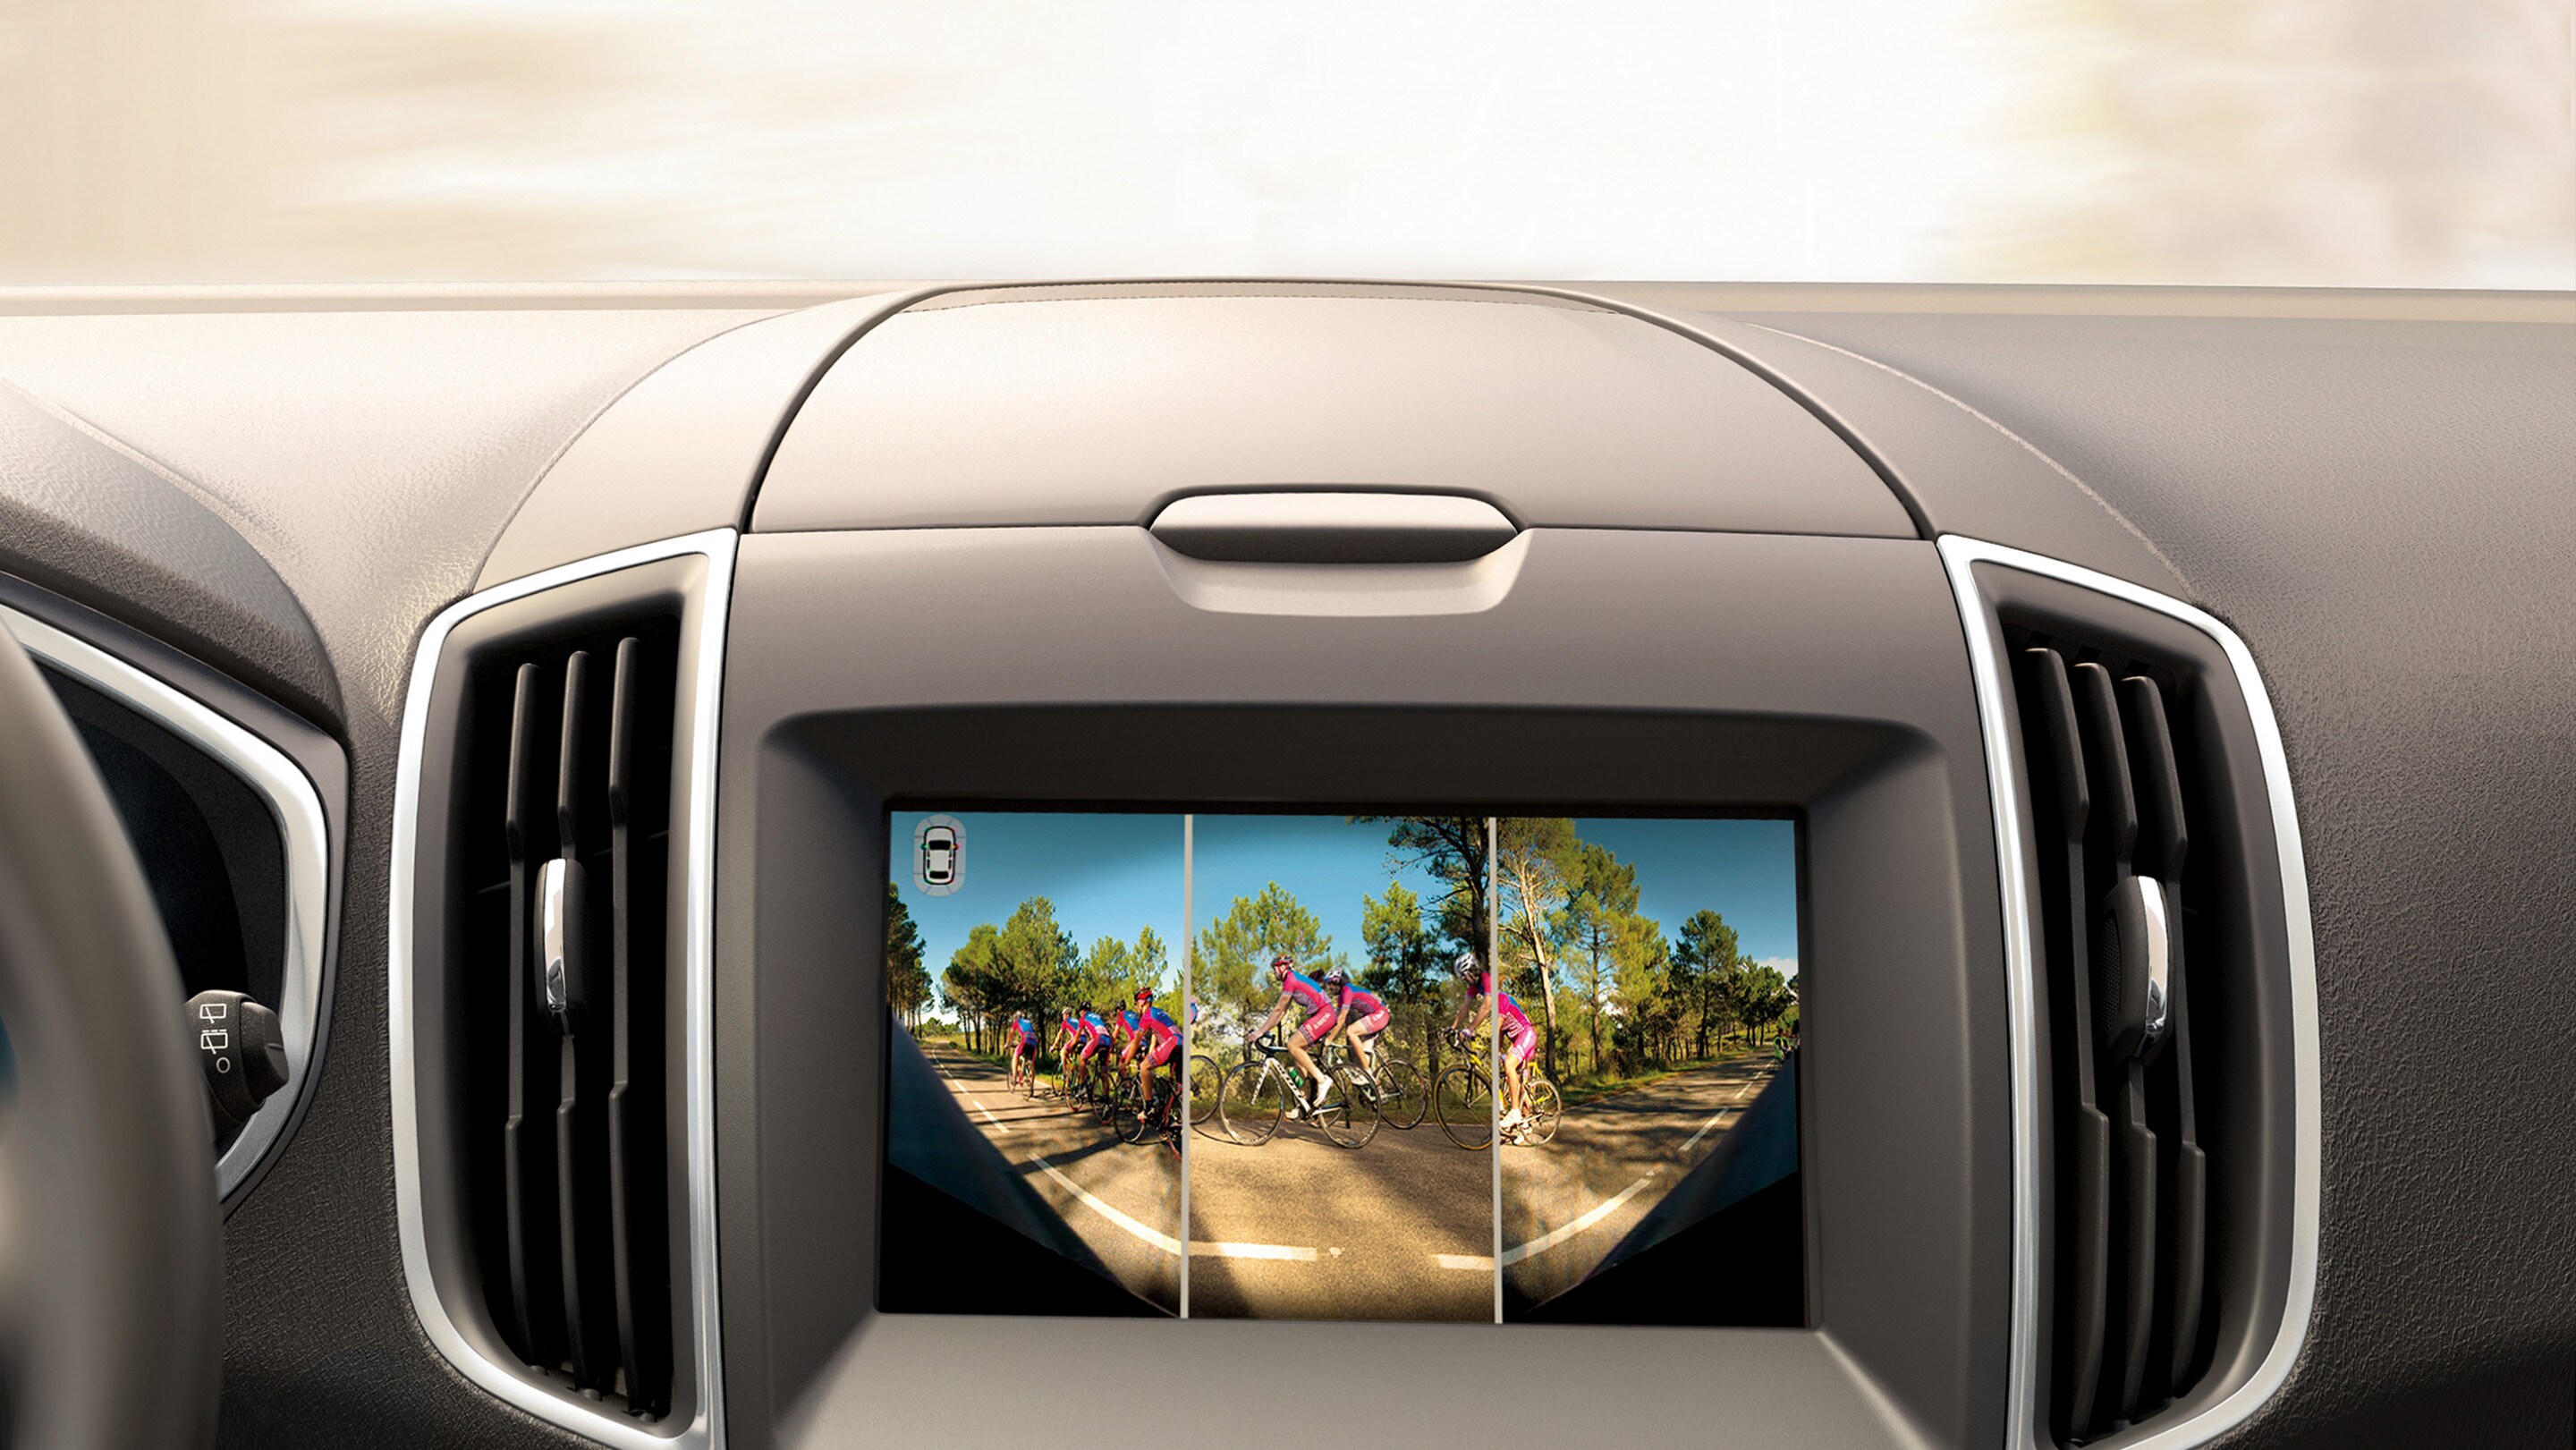 Ford Galaxy Hybrid Frontkamera mit Split View-Technologie Animation Film